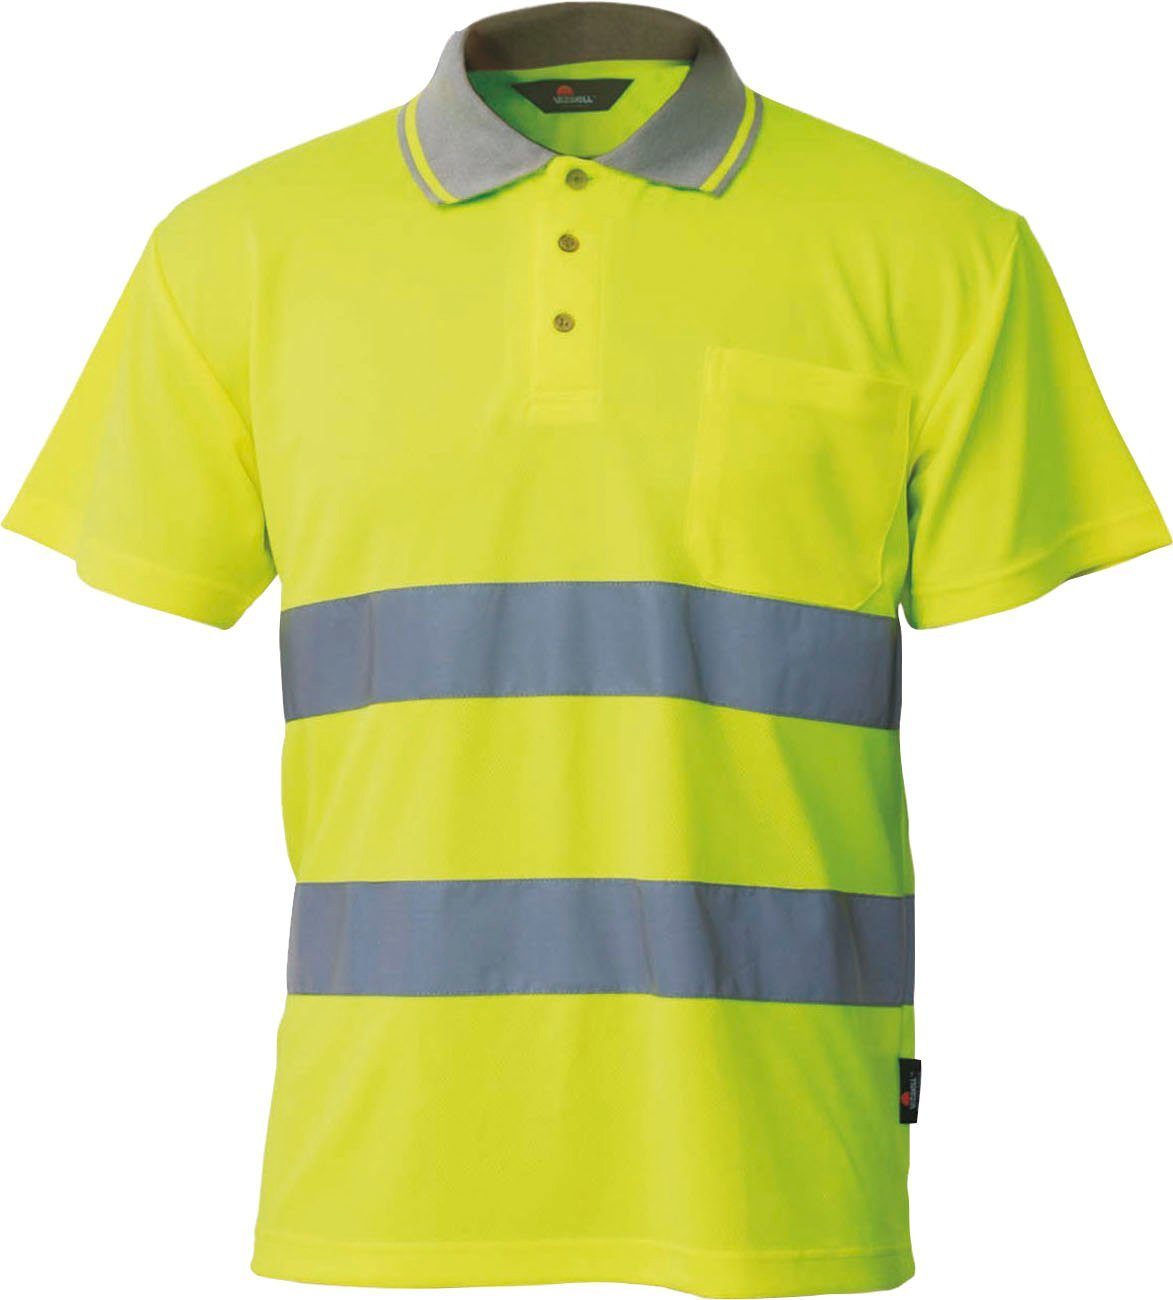 Herock Poloshirt Sleeves-Hochsichtbar 2 horizontale Streifen aus  hochwertigem Reflexmaterial auf dem Körper